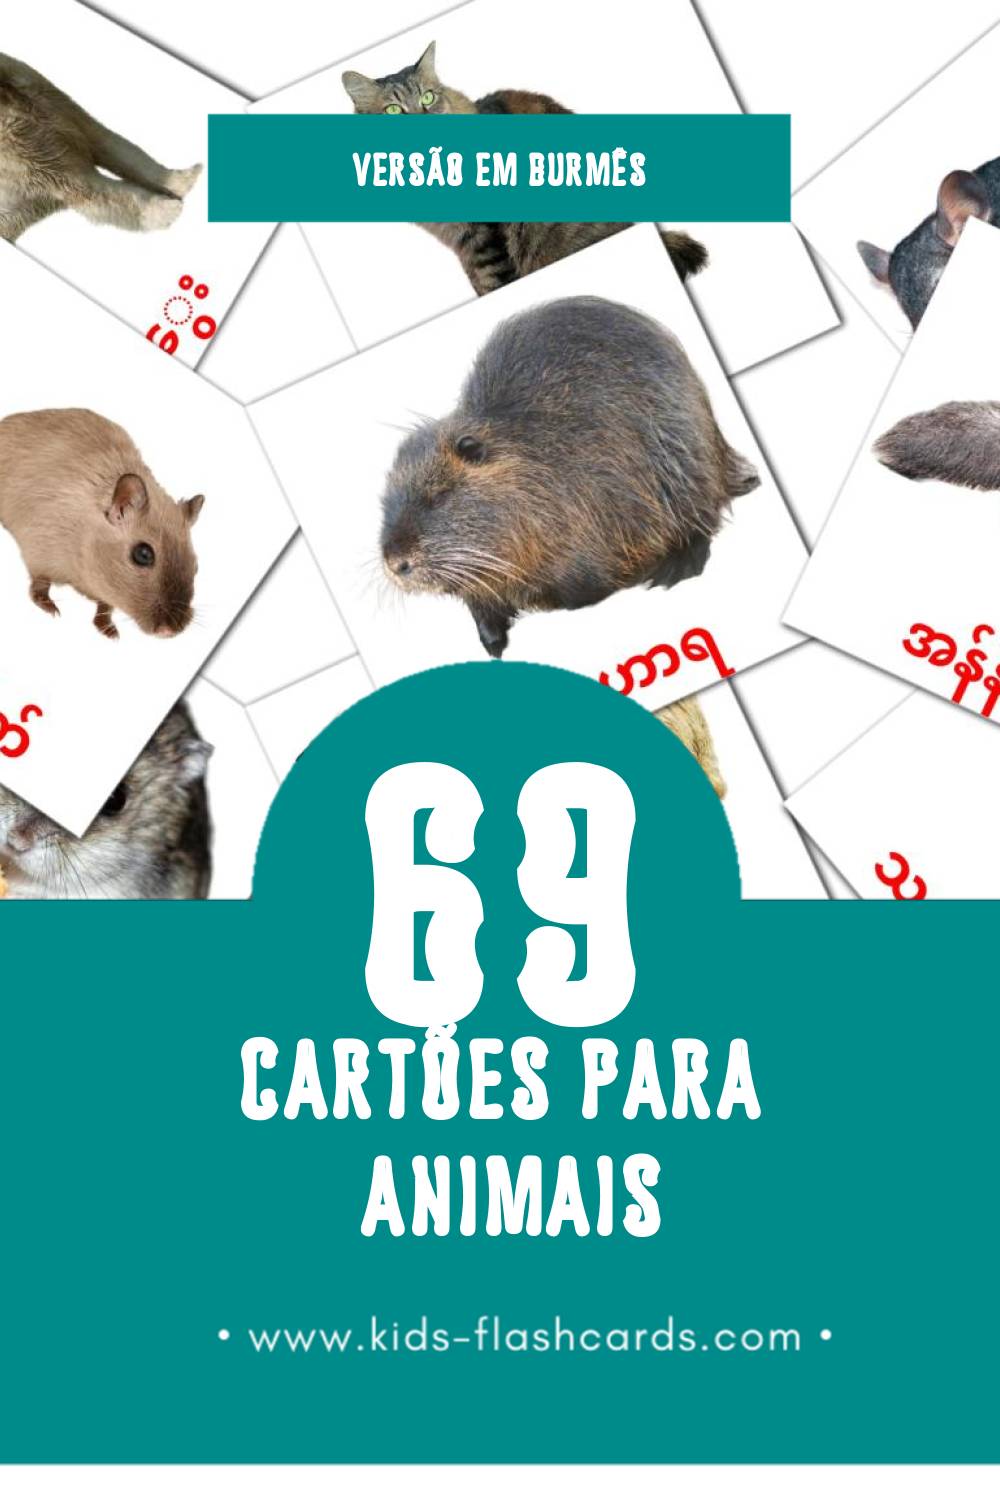 Flashcards de တိရစ္ဆာန်များ Visuais para Toddlers (69 cartões em Burmês)